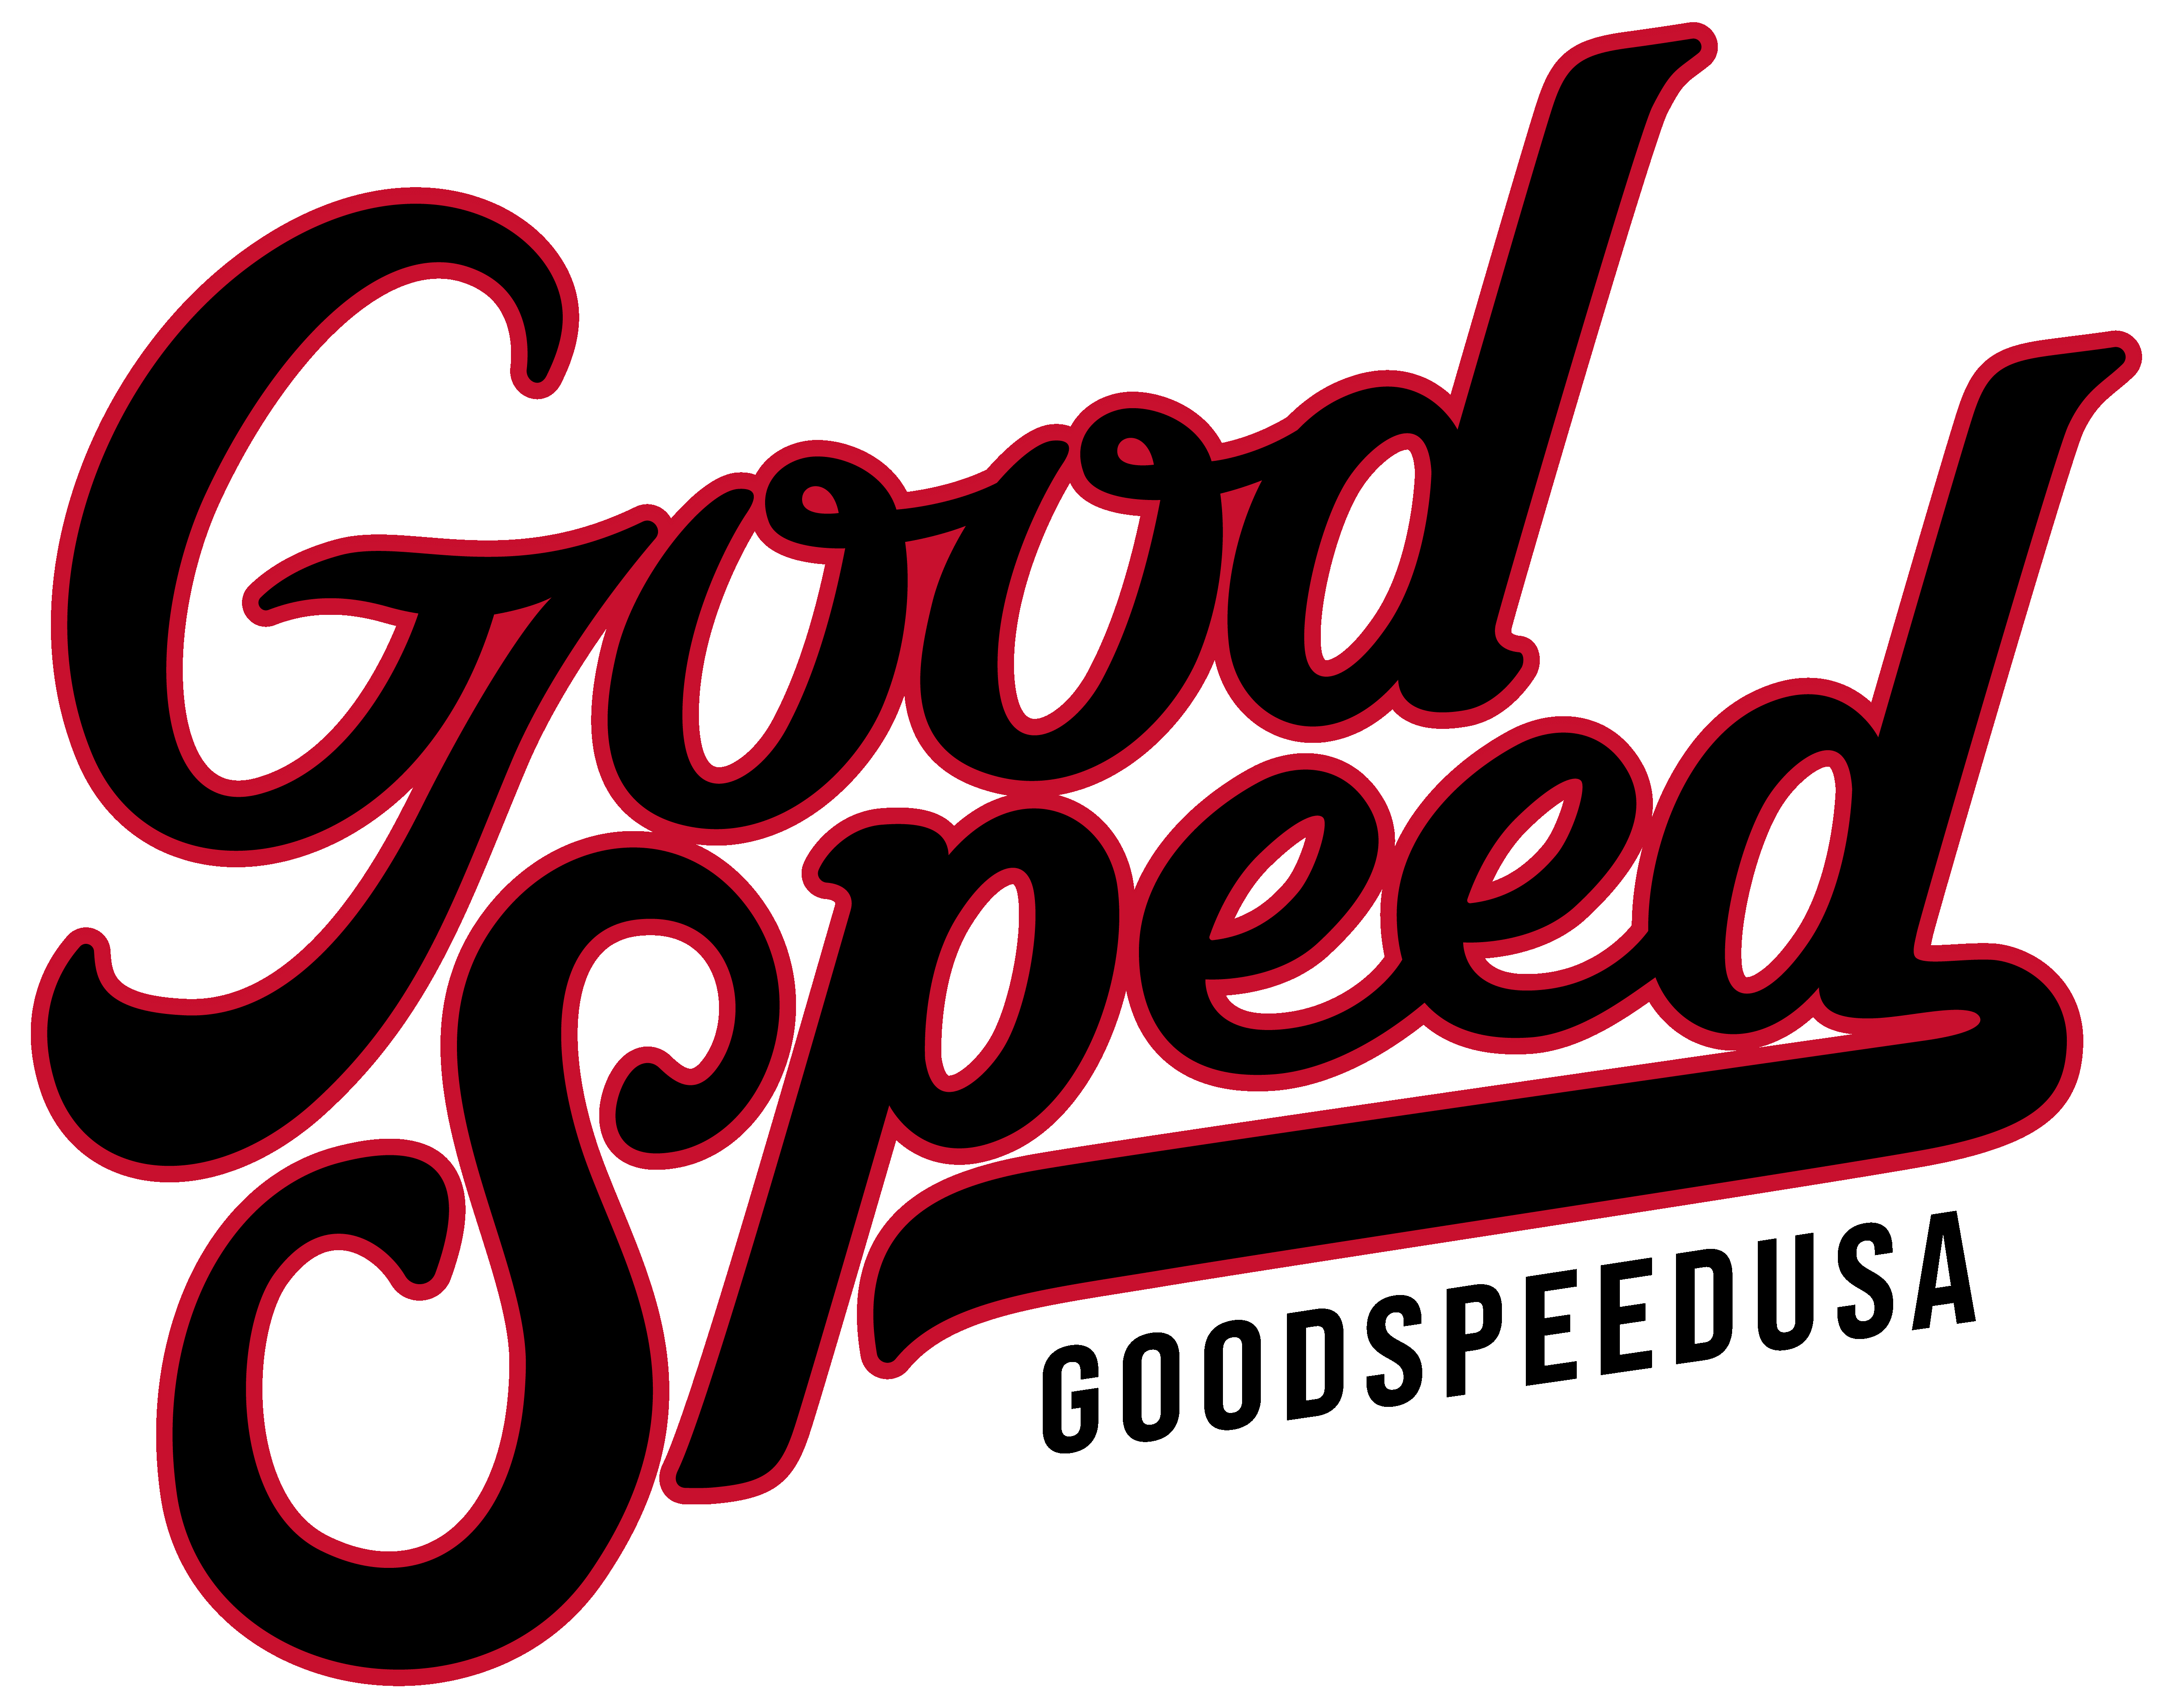 Good Speed USA